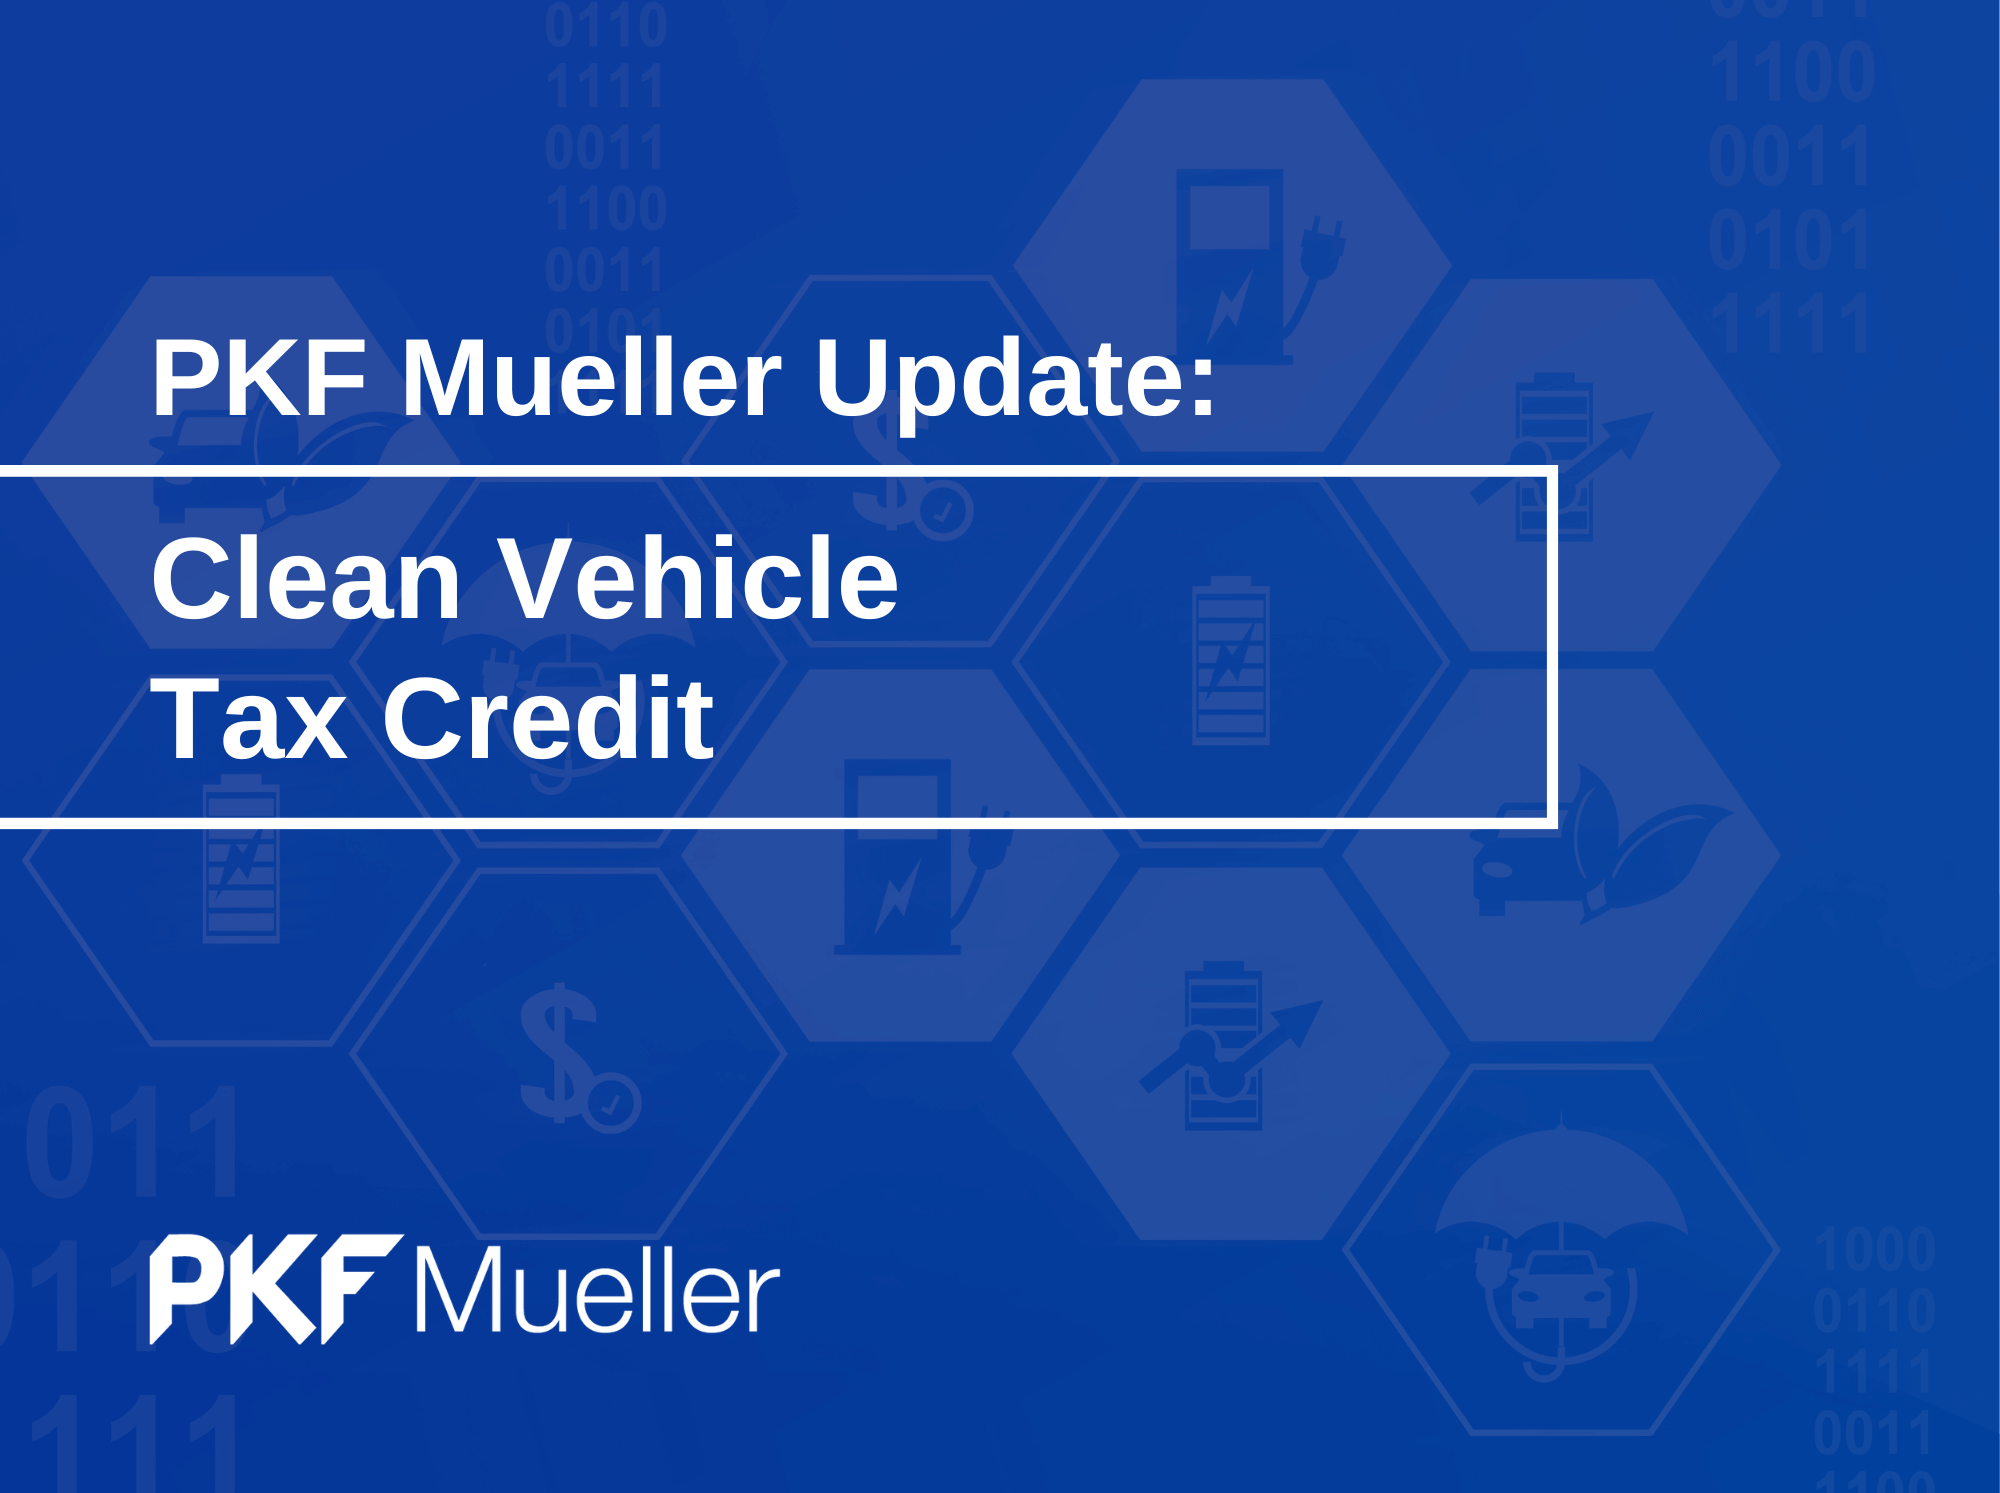 Clean Vehicle Tax Credit